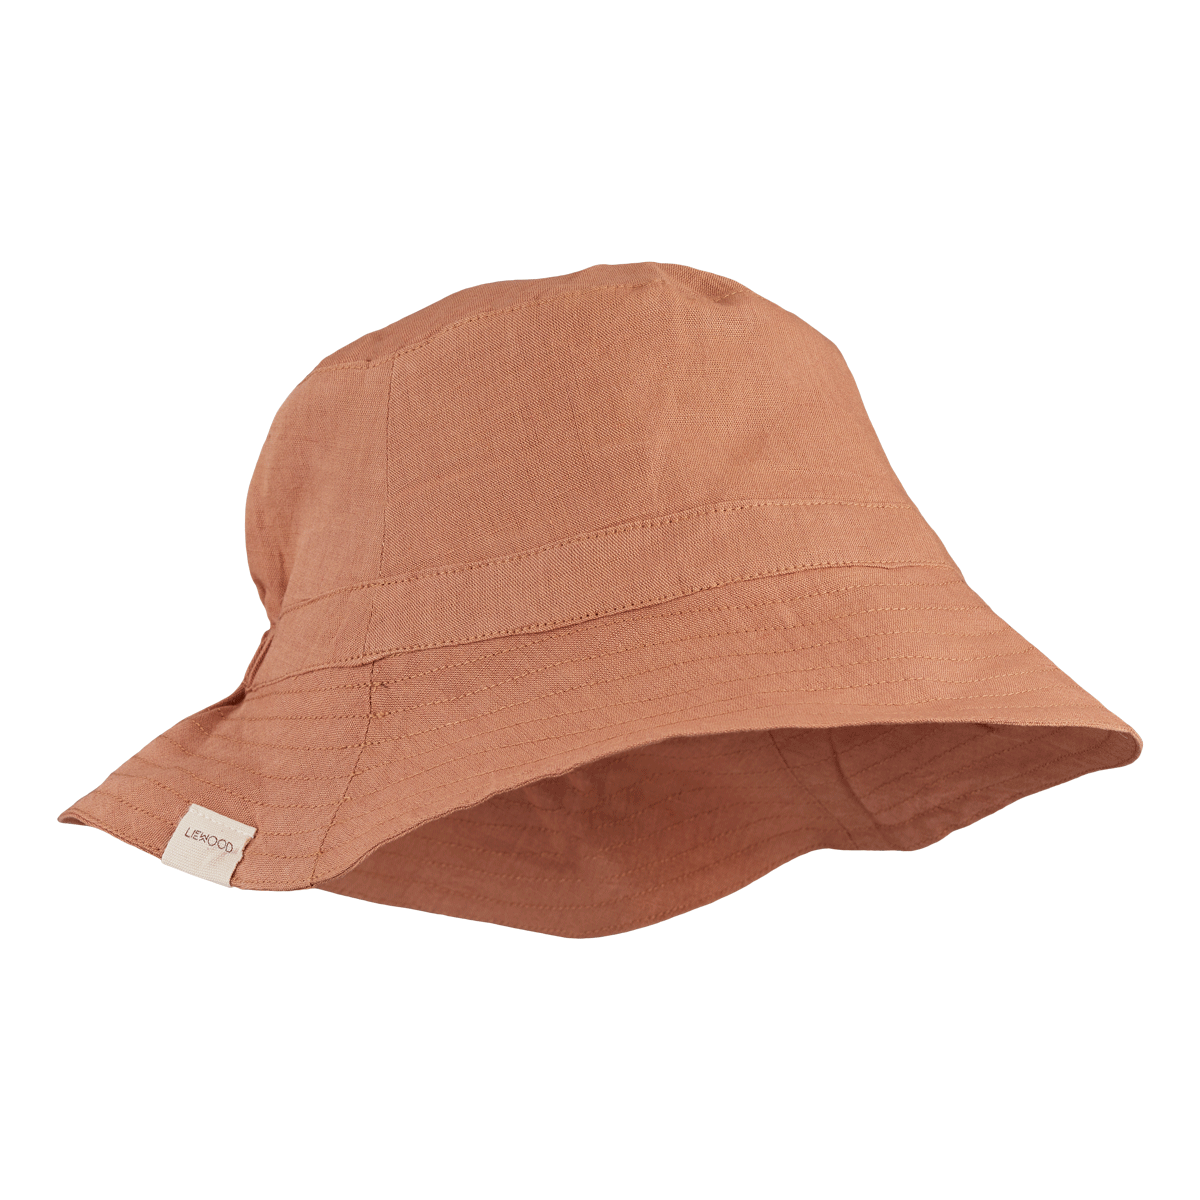 Liewood Delta bucket hat - tuscany rose sunhat organic cotton linen